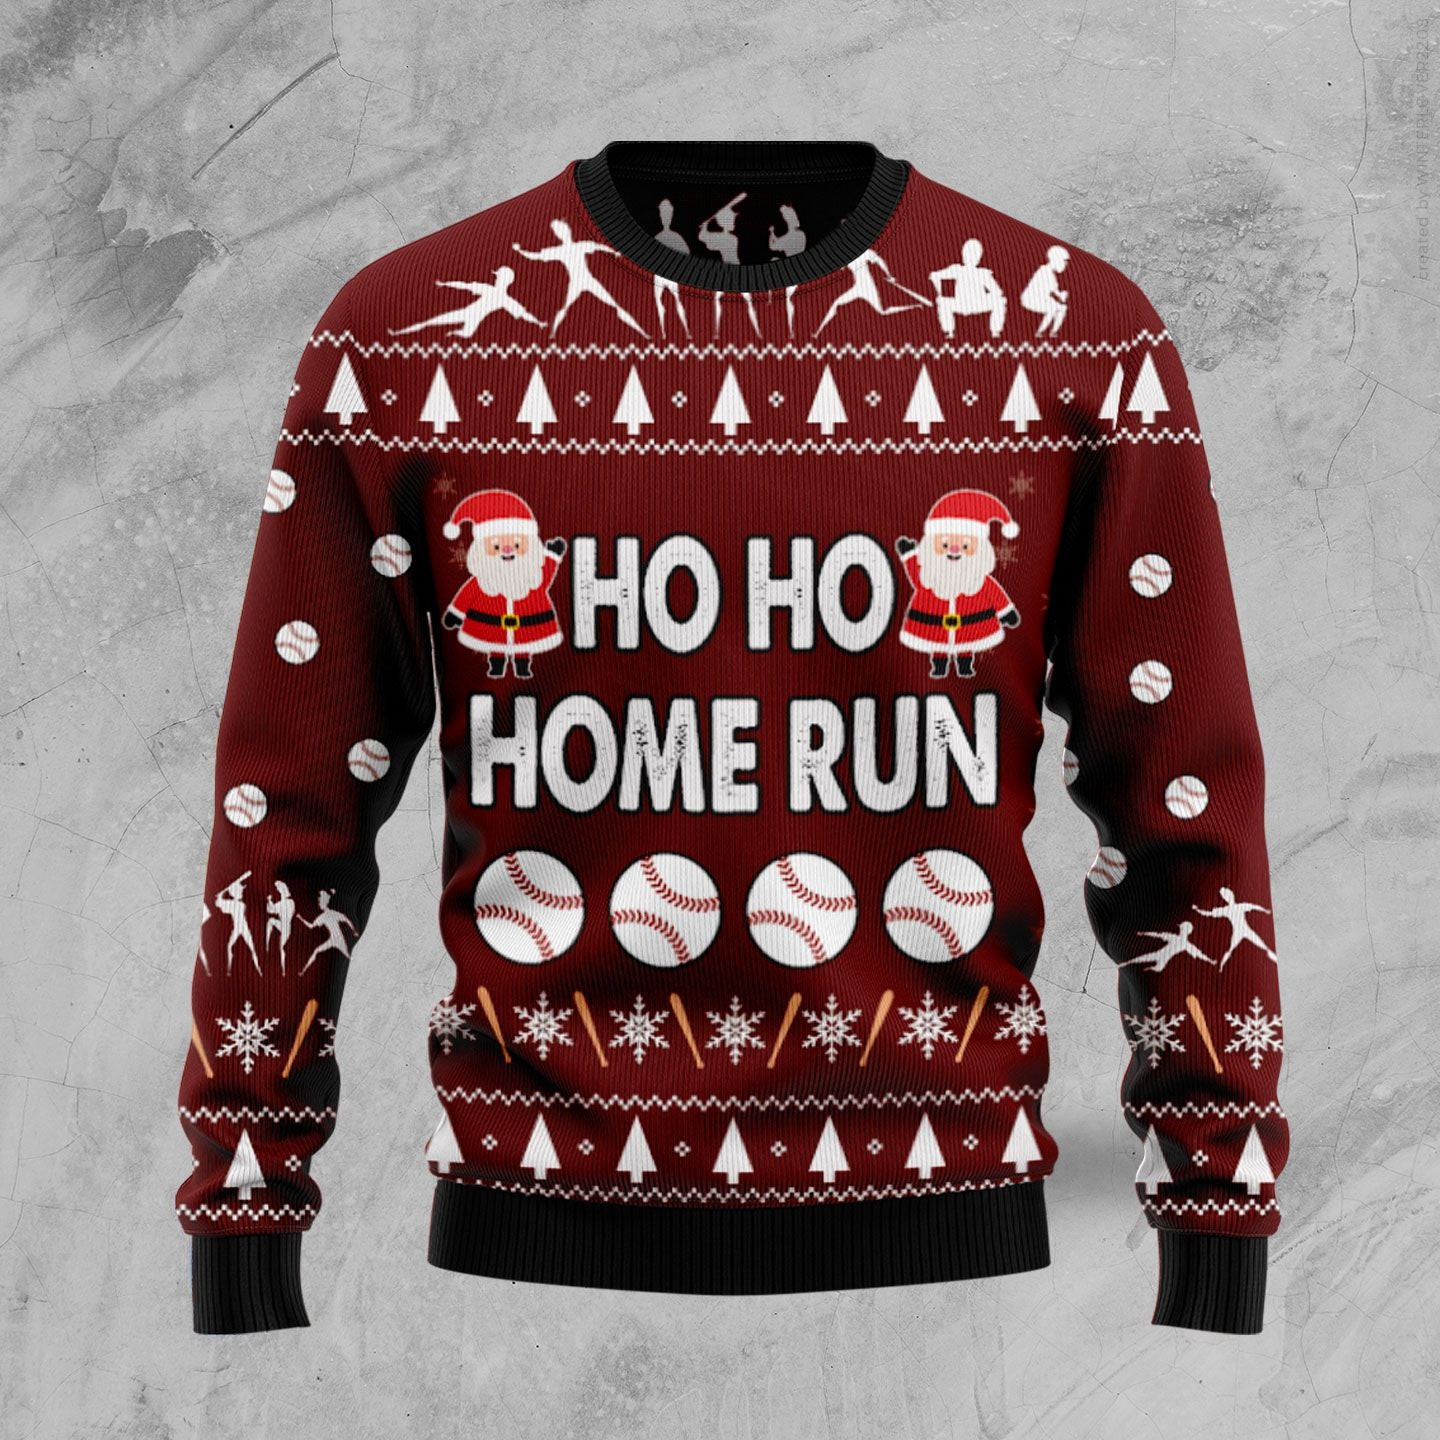 Baseball Hoho Home Run Ugly Christmas Sweater